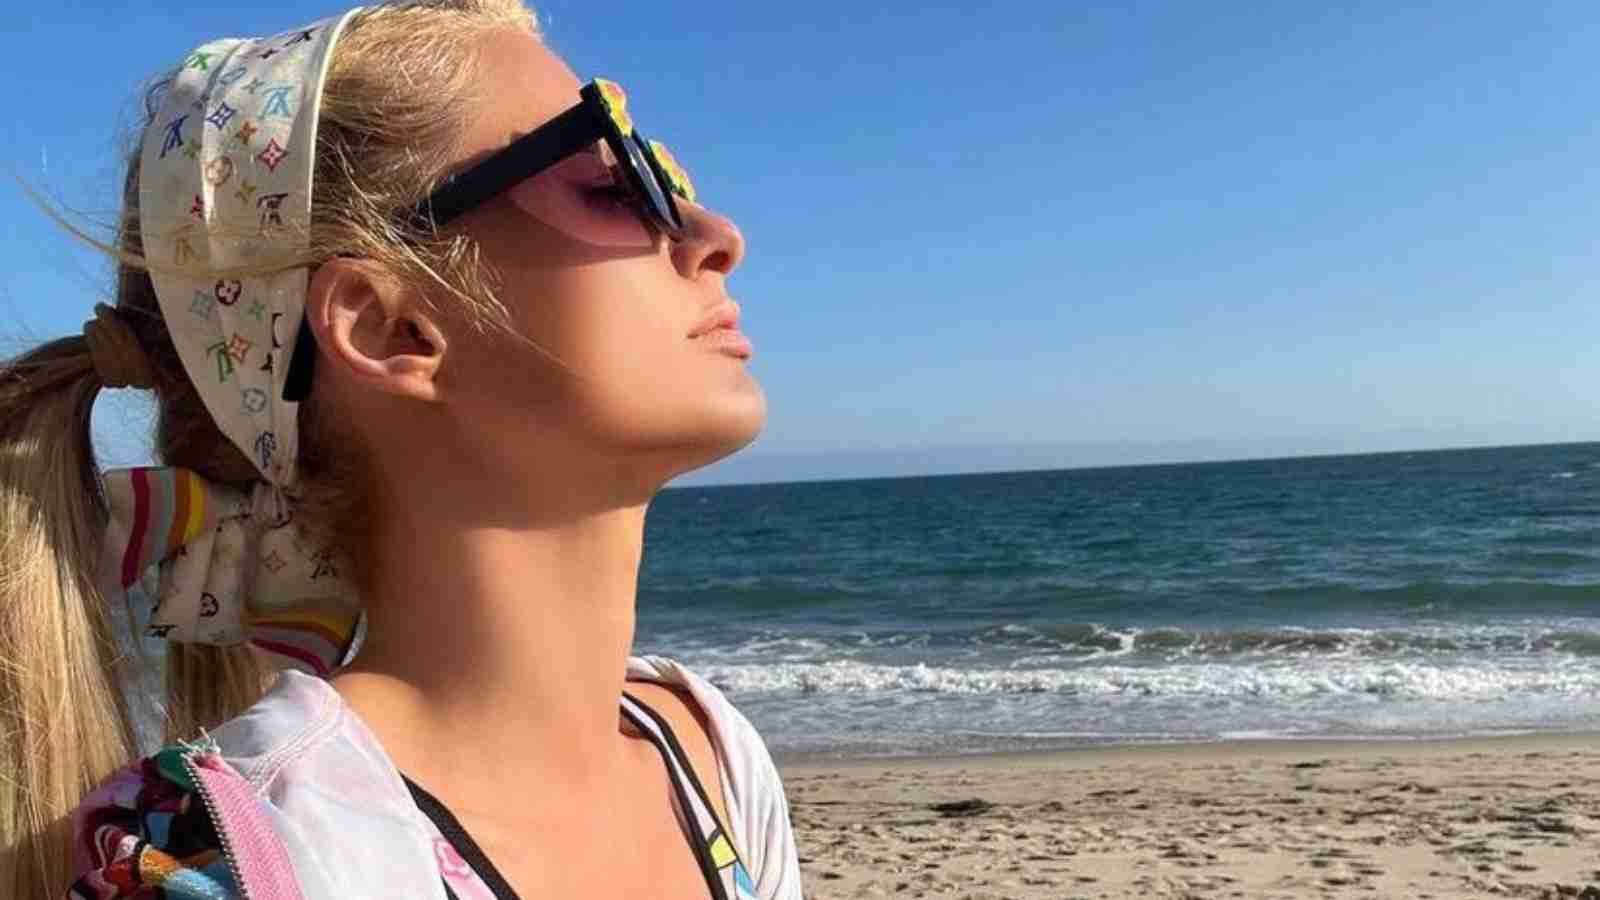 Paris Hilton's New Instagram Beach Post